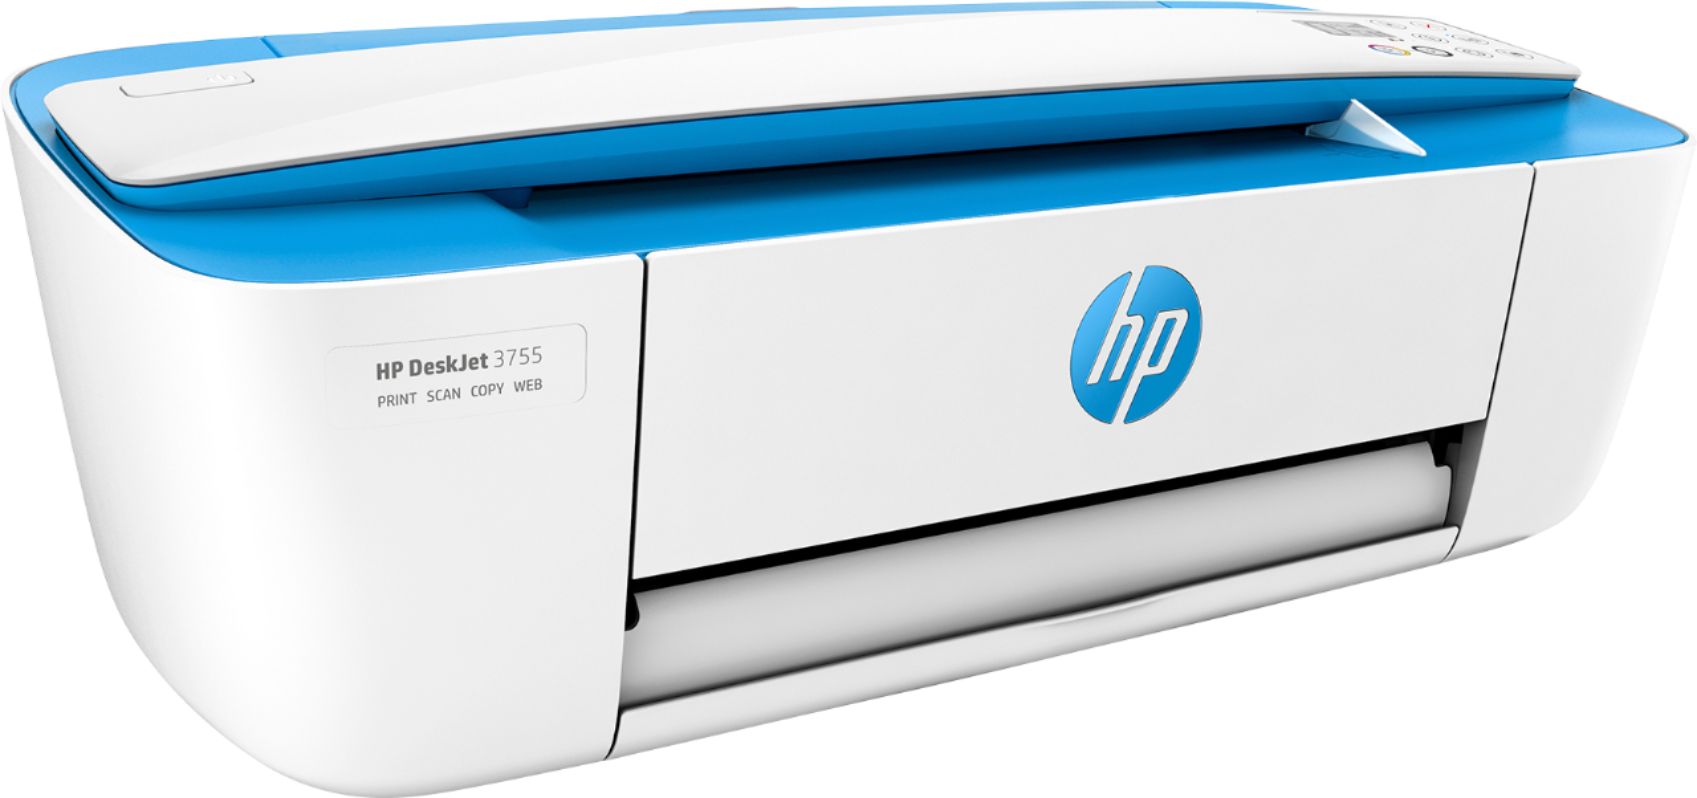 HP DeskJet 3755 All-in-One Instant Ink Ready Inkjet Printer Blue J9V90A#B1H - Best Buy